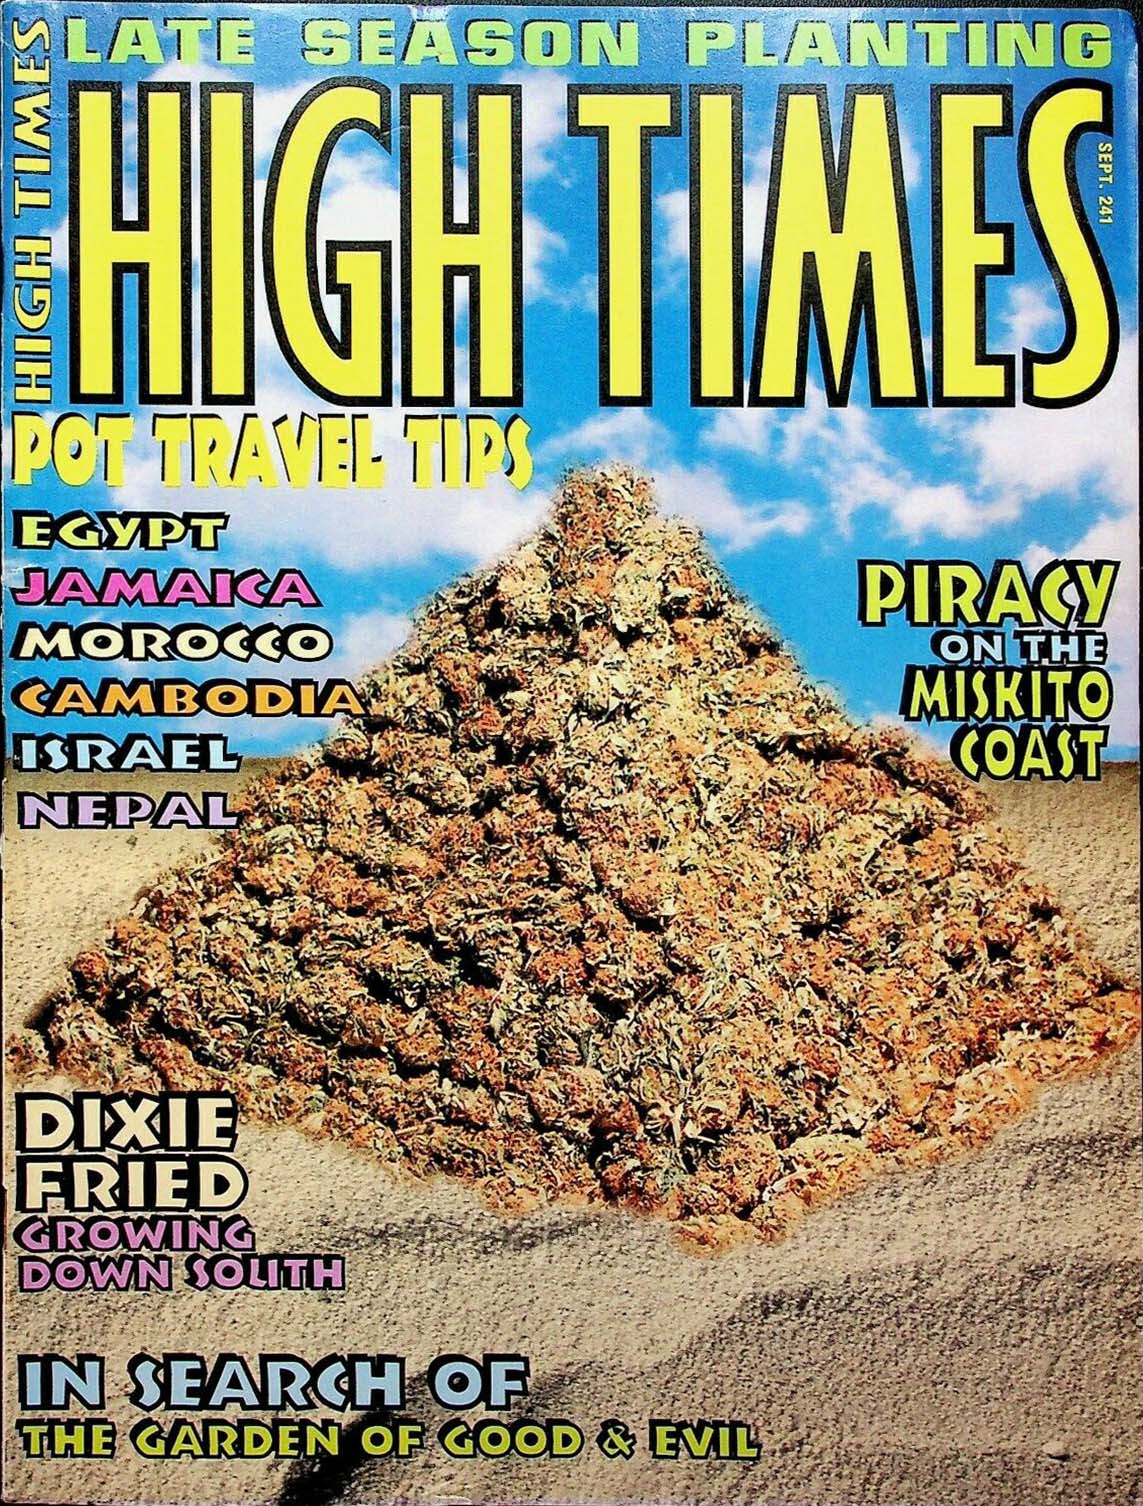 High Times Sep 1995 magazine reviews